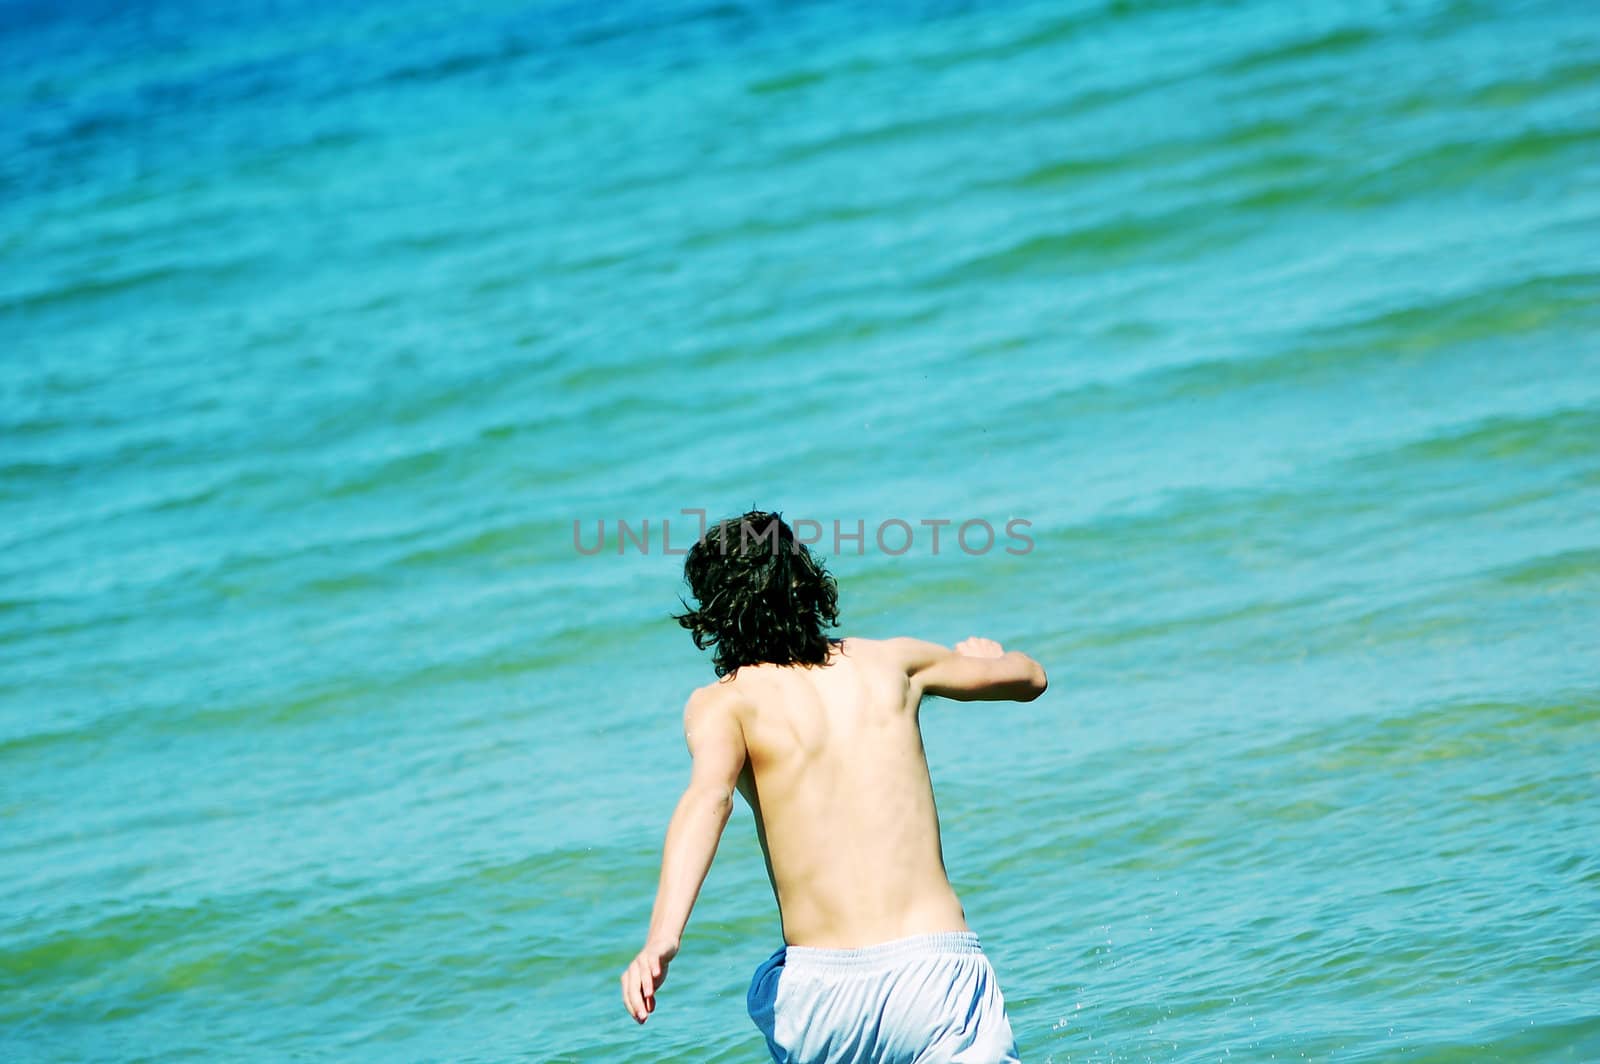 Boy running the the sea. Enjoying summertime